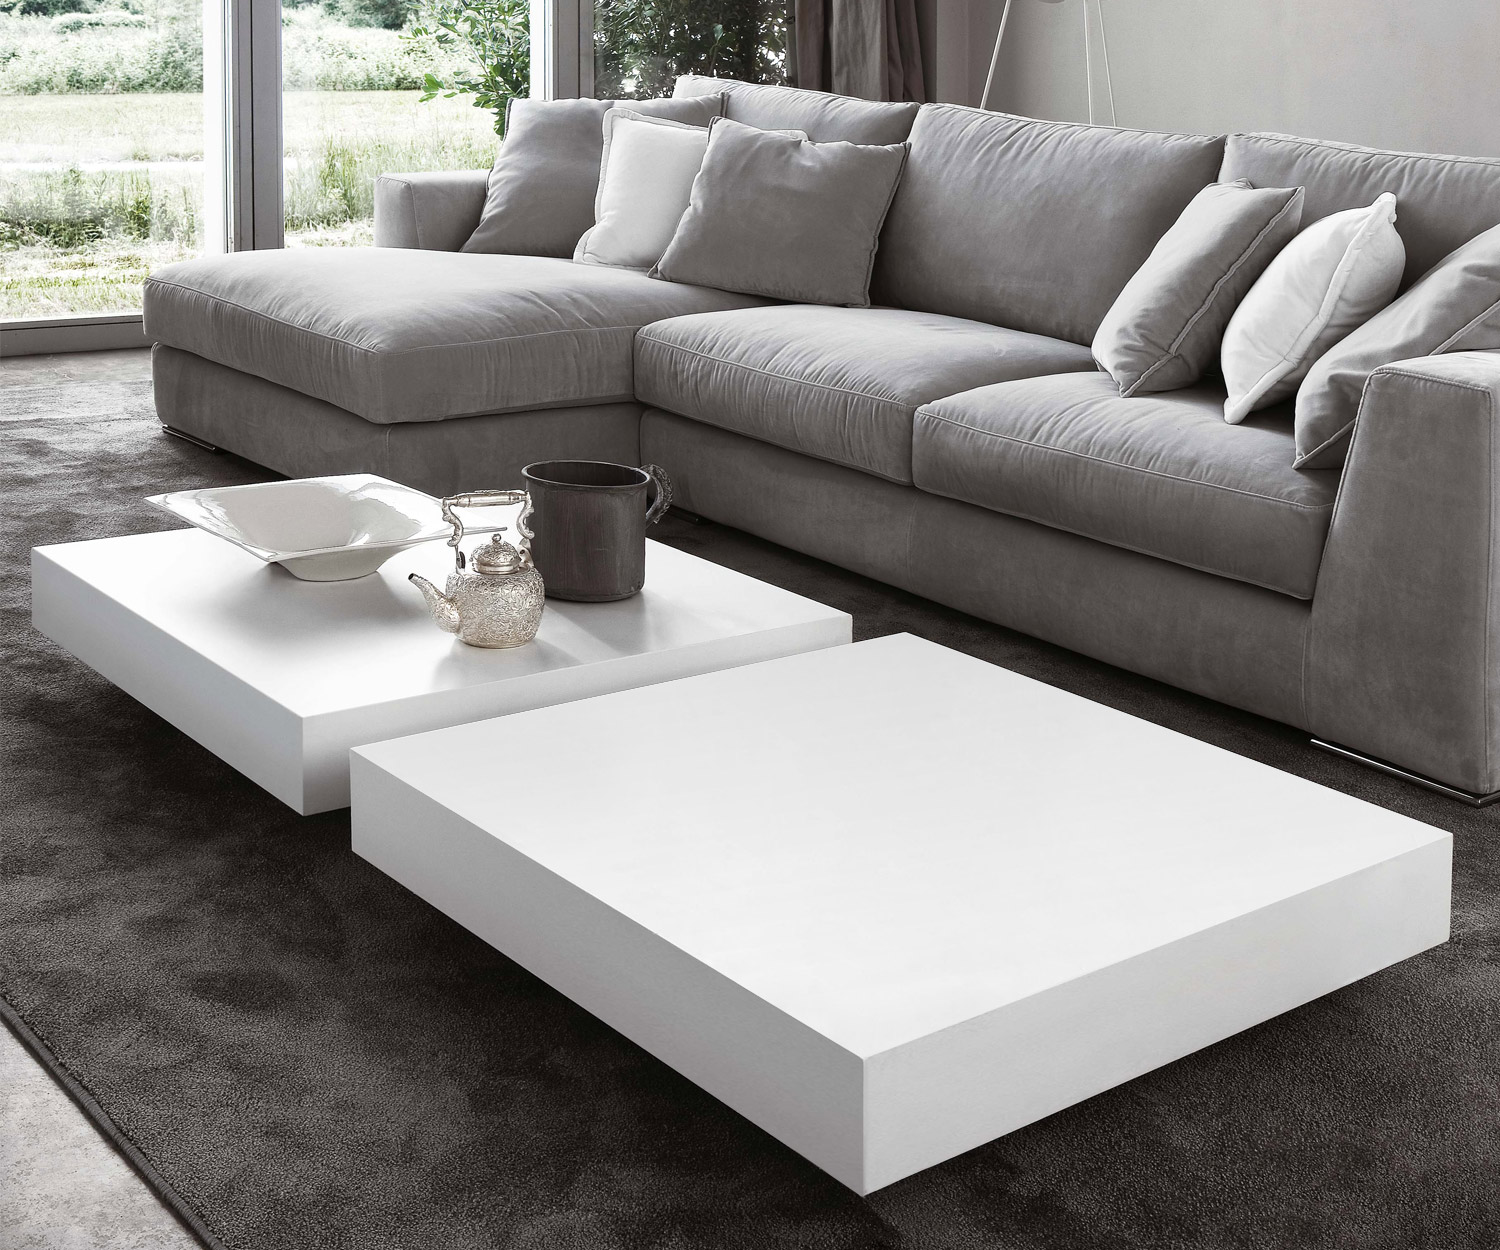 Exclusif Novamobili Table basse design ombre blanche